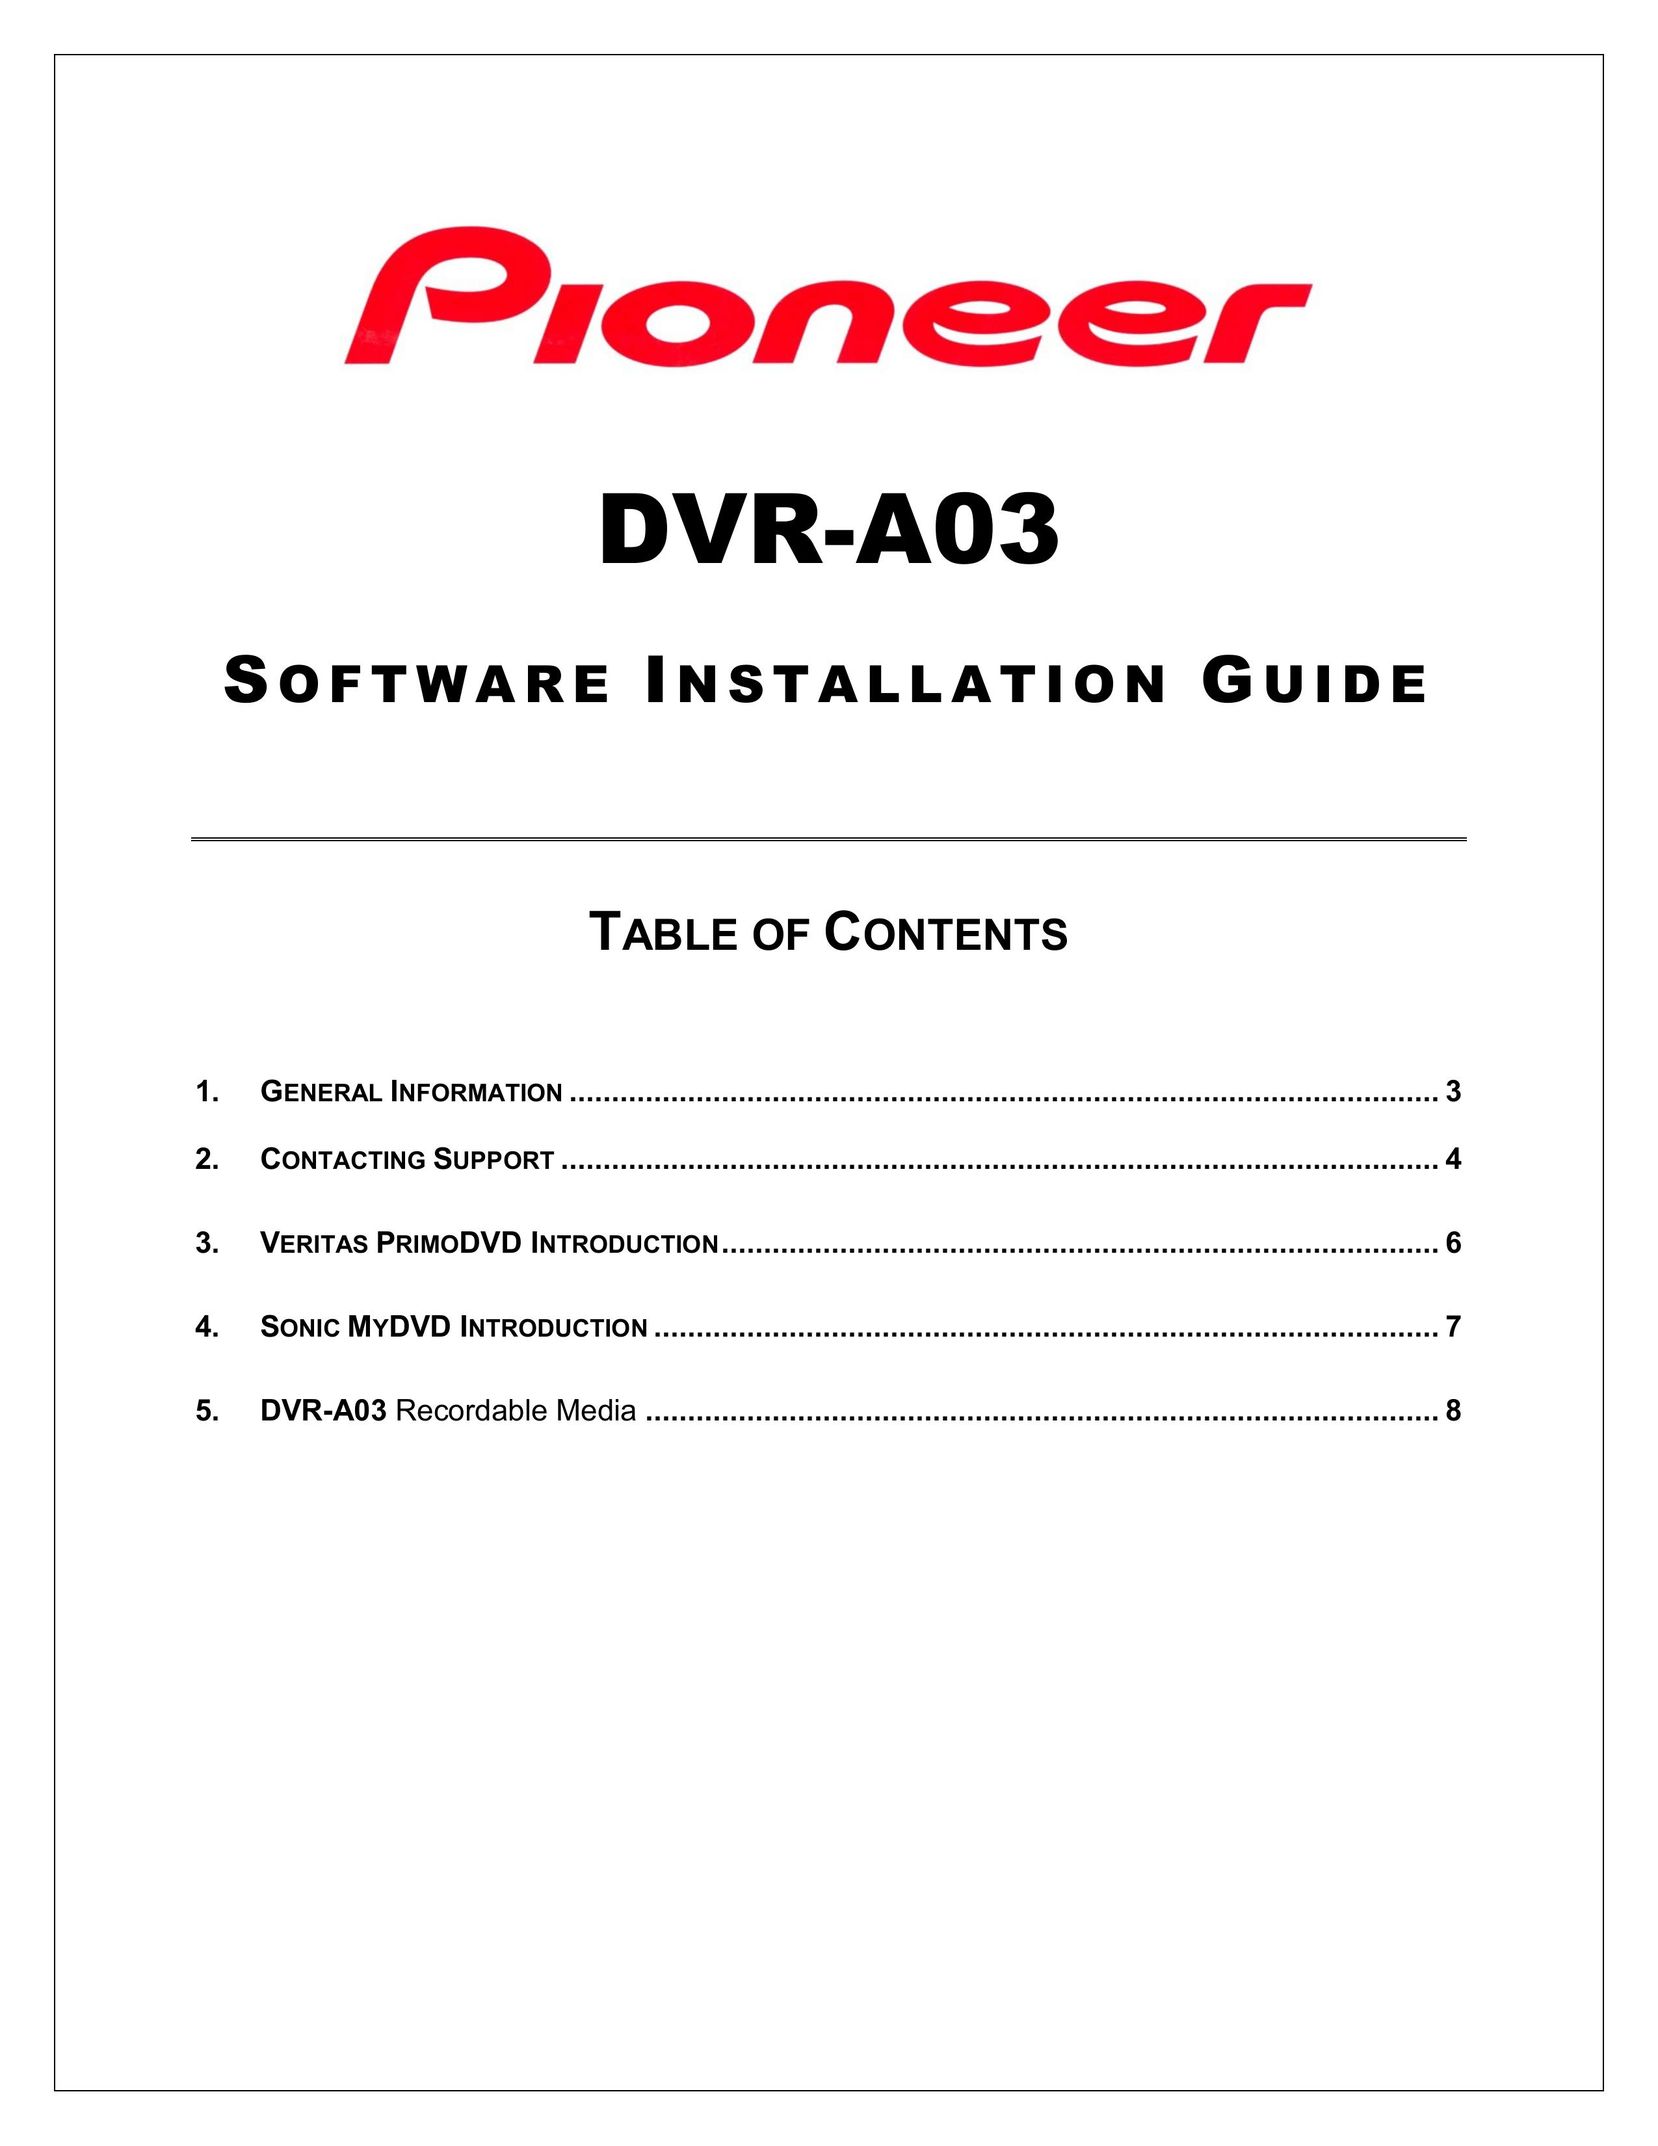 Pioneer DVR-A03 DVR User Manual